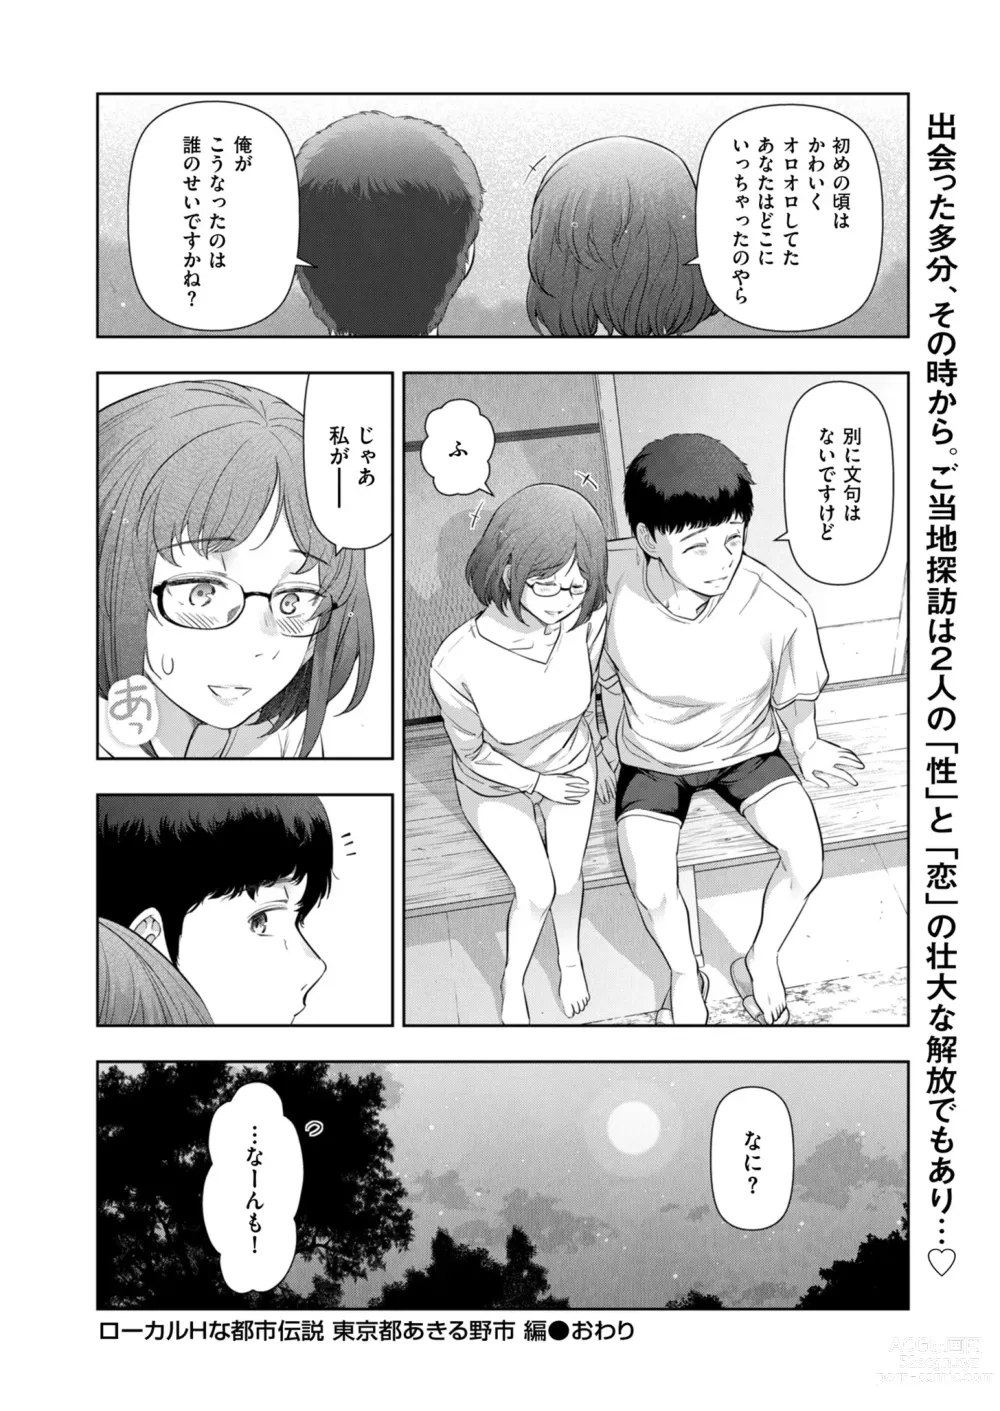 Page 156 of manga Local H na Toshi Densetsu